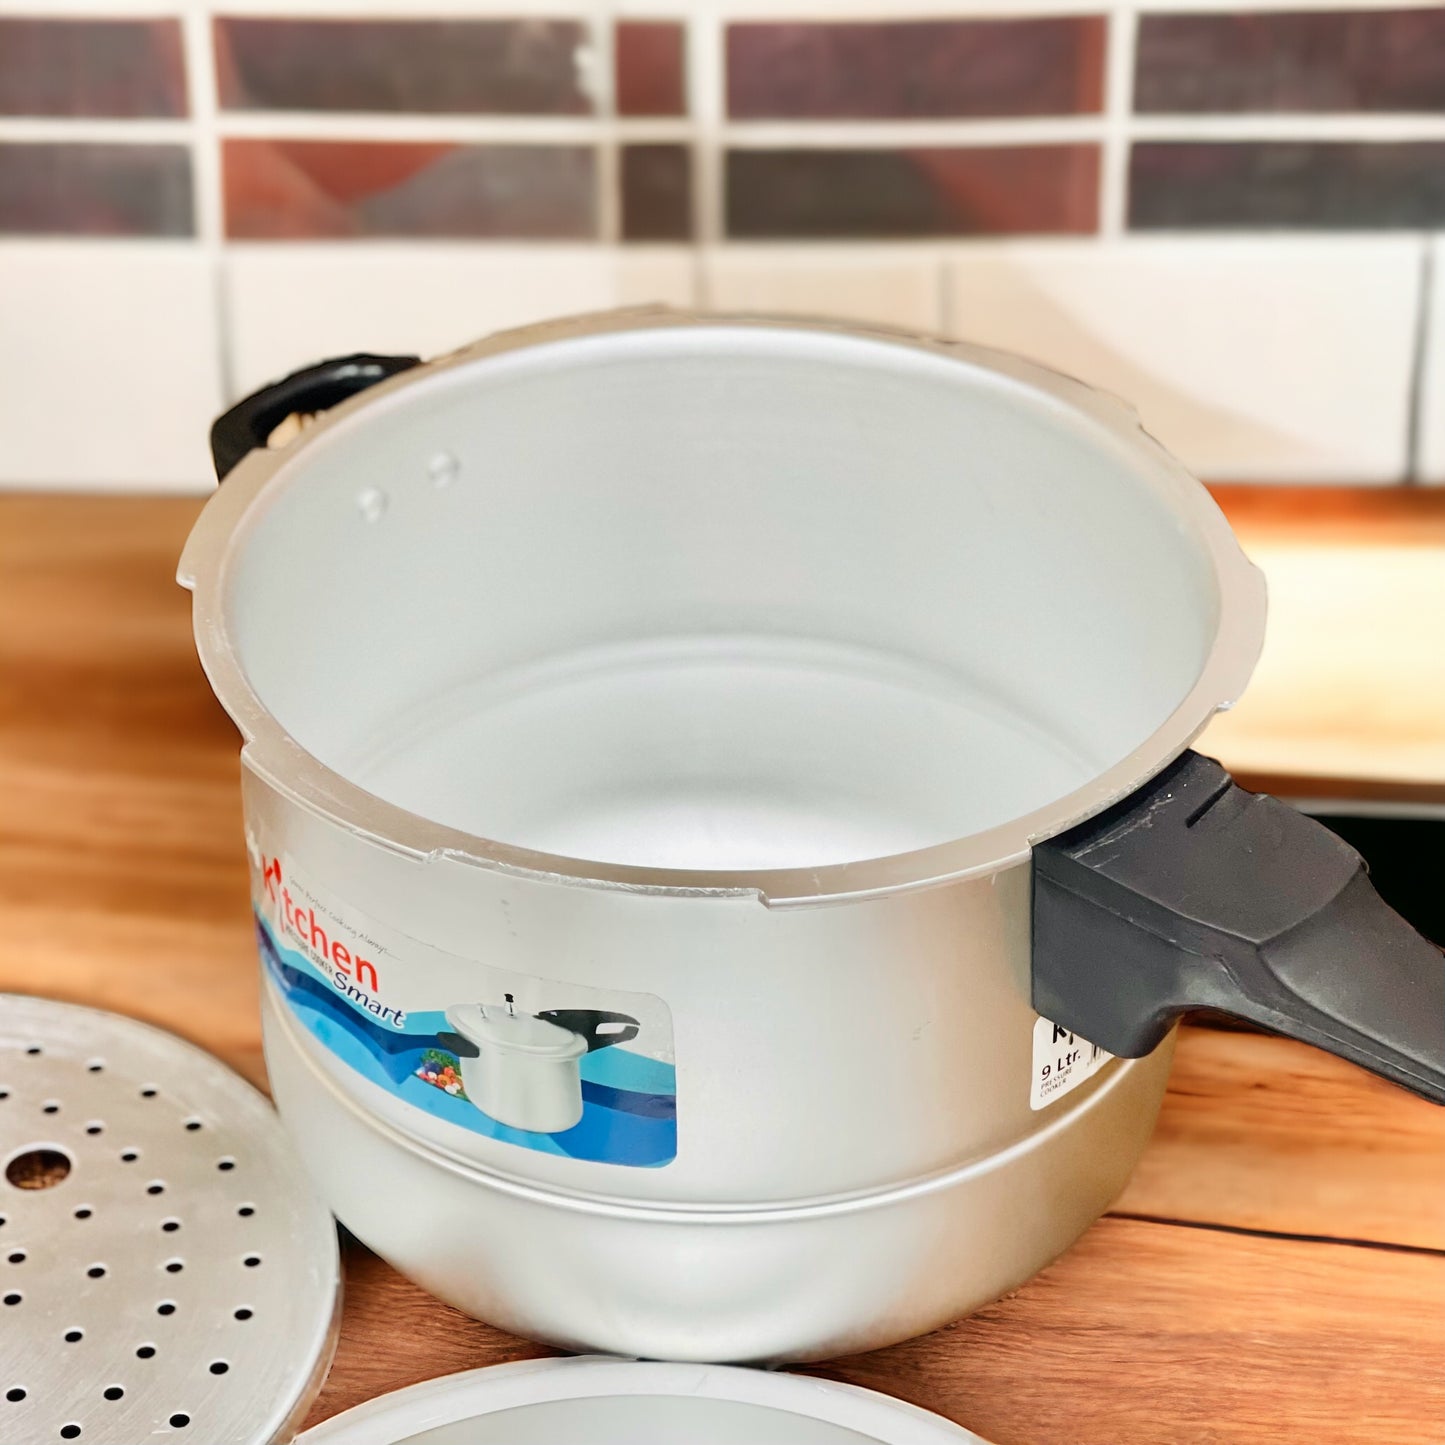 Kitchen Smart Pressure Cooker (9 Liter)